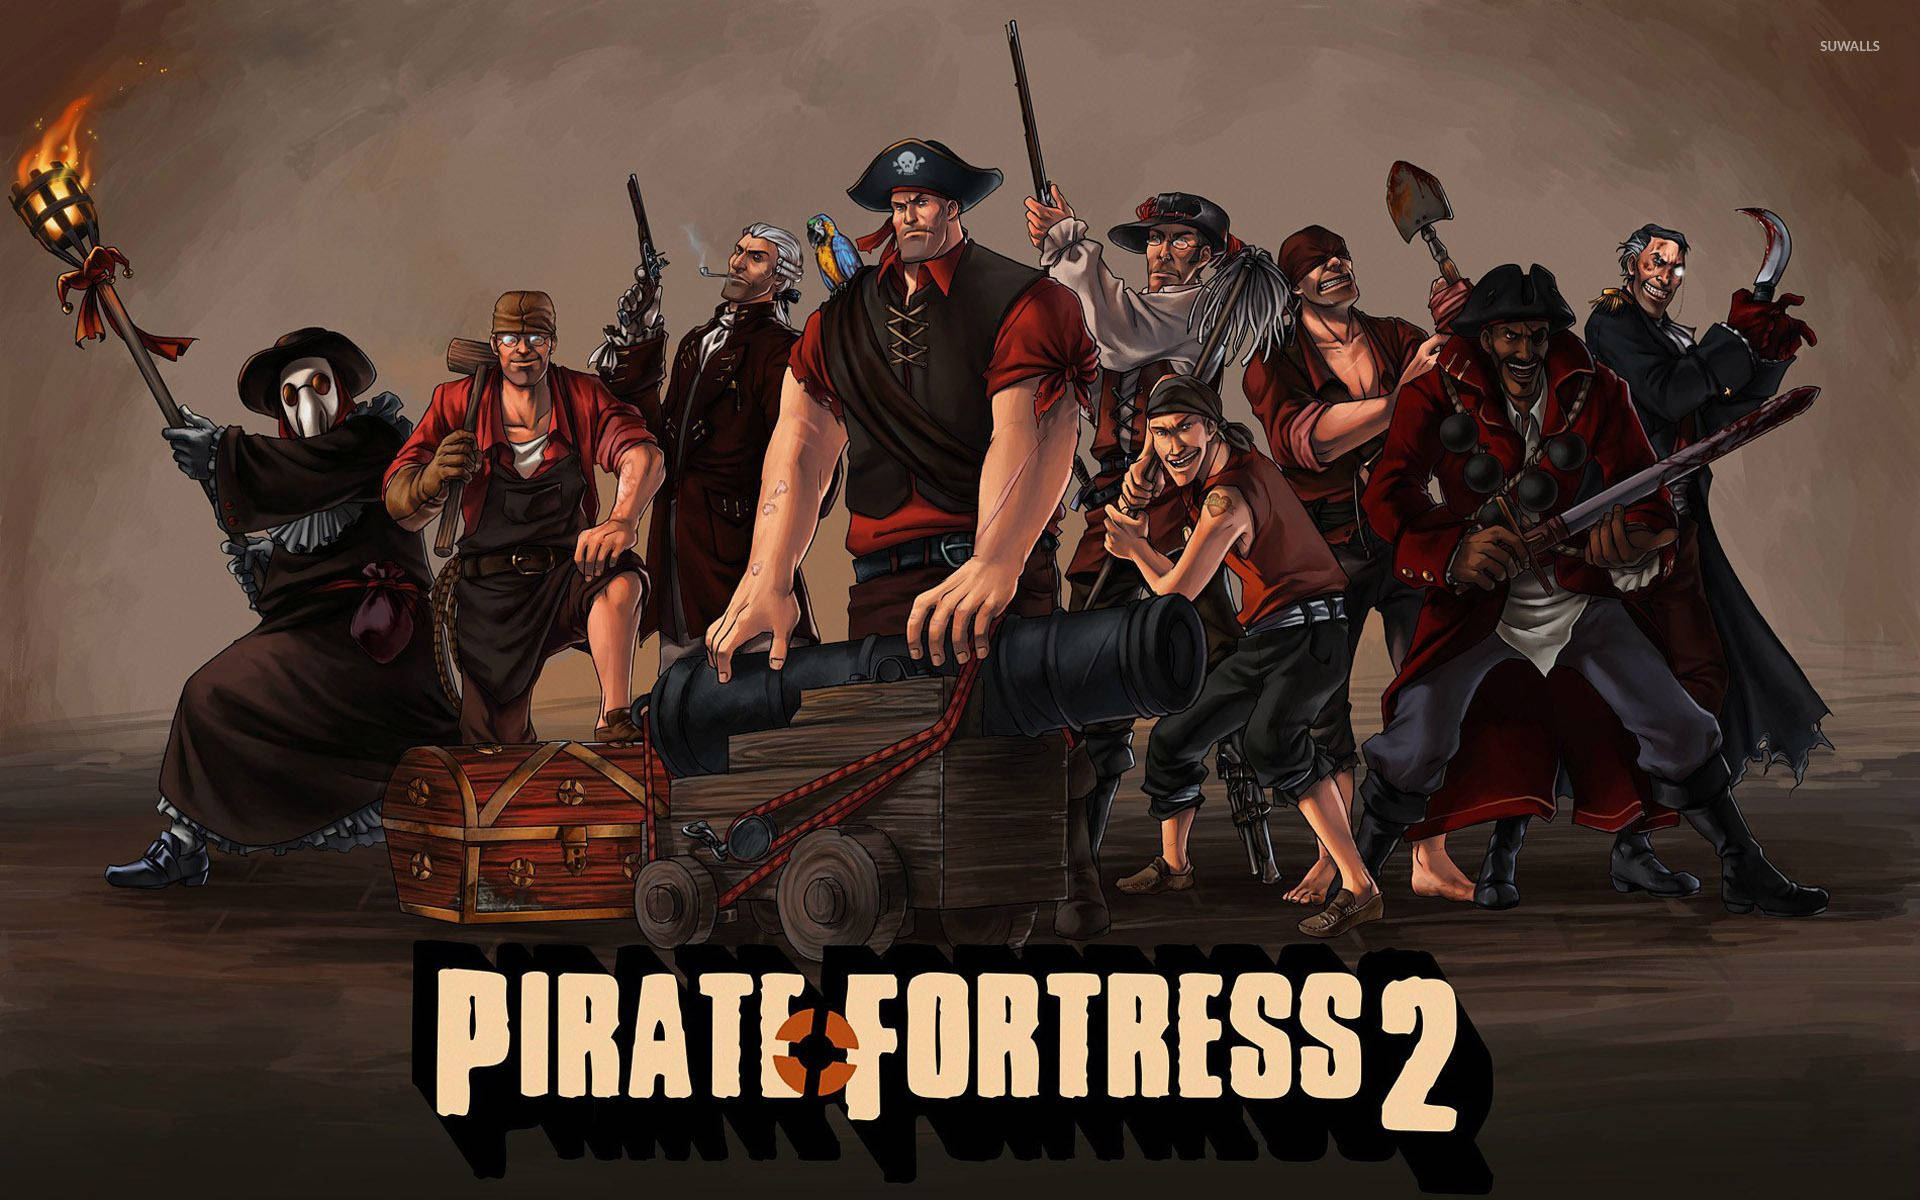 Team Fortress 2 Pirate Fanart Background